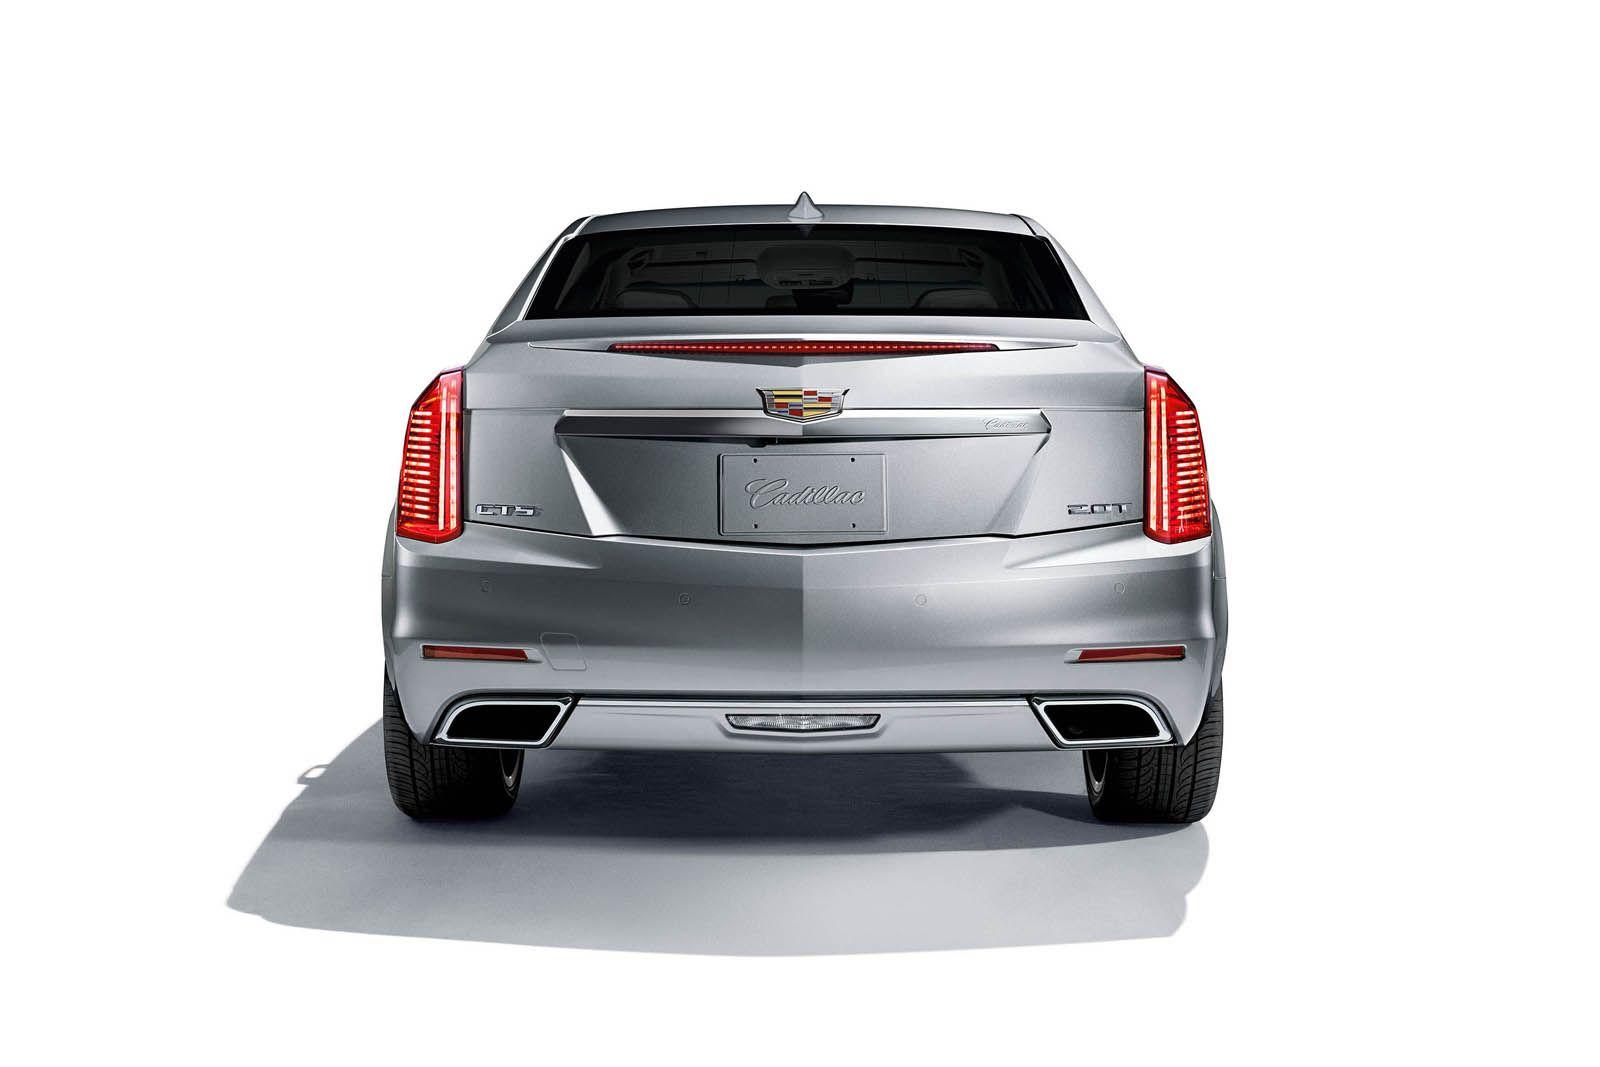 2015 Cadillac New Logo - 2015 Cadillac CTS Sedan Gets New Logo and More Tech - AutoTribute